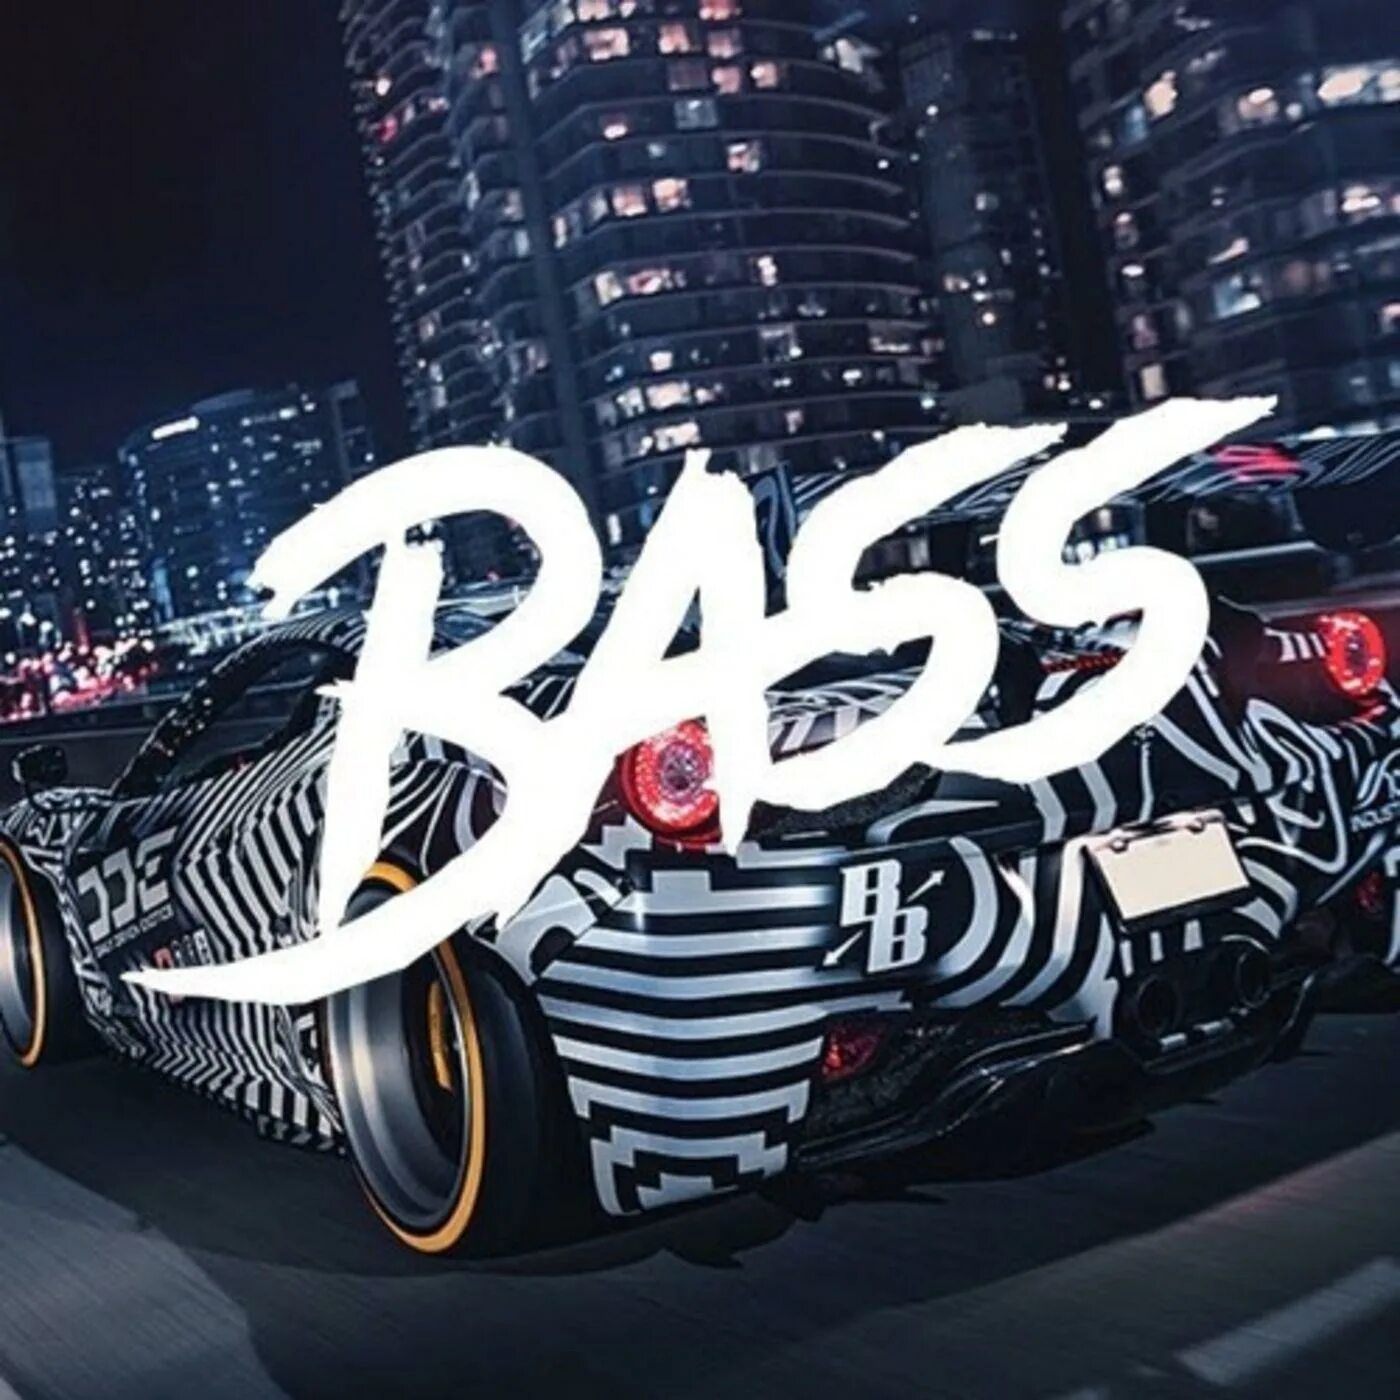 Bass boosted remix 2024. Басс. Басс Мьюзик. Ремикс басс. BASSBOOSTED.